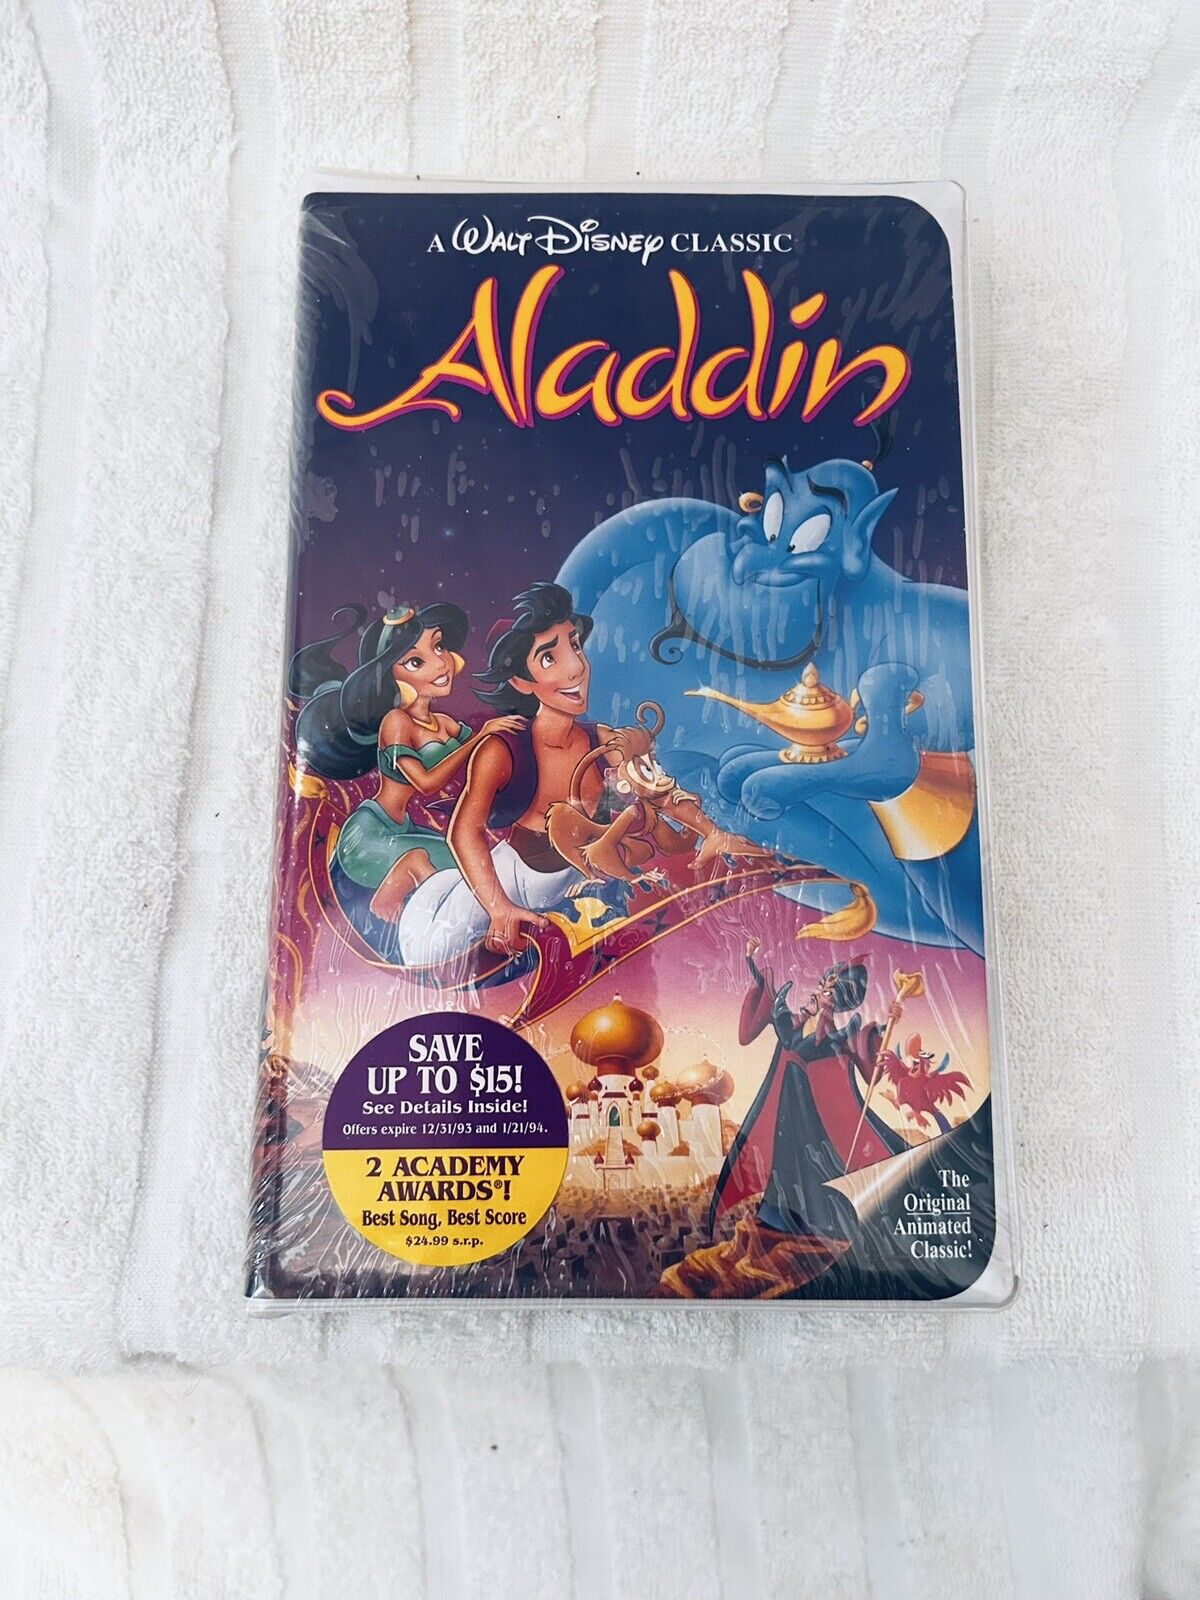 RARE Walt Disney’s Aladdin Black Diamond Classic VHS #1662 Sealed NEW